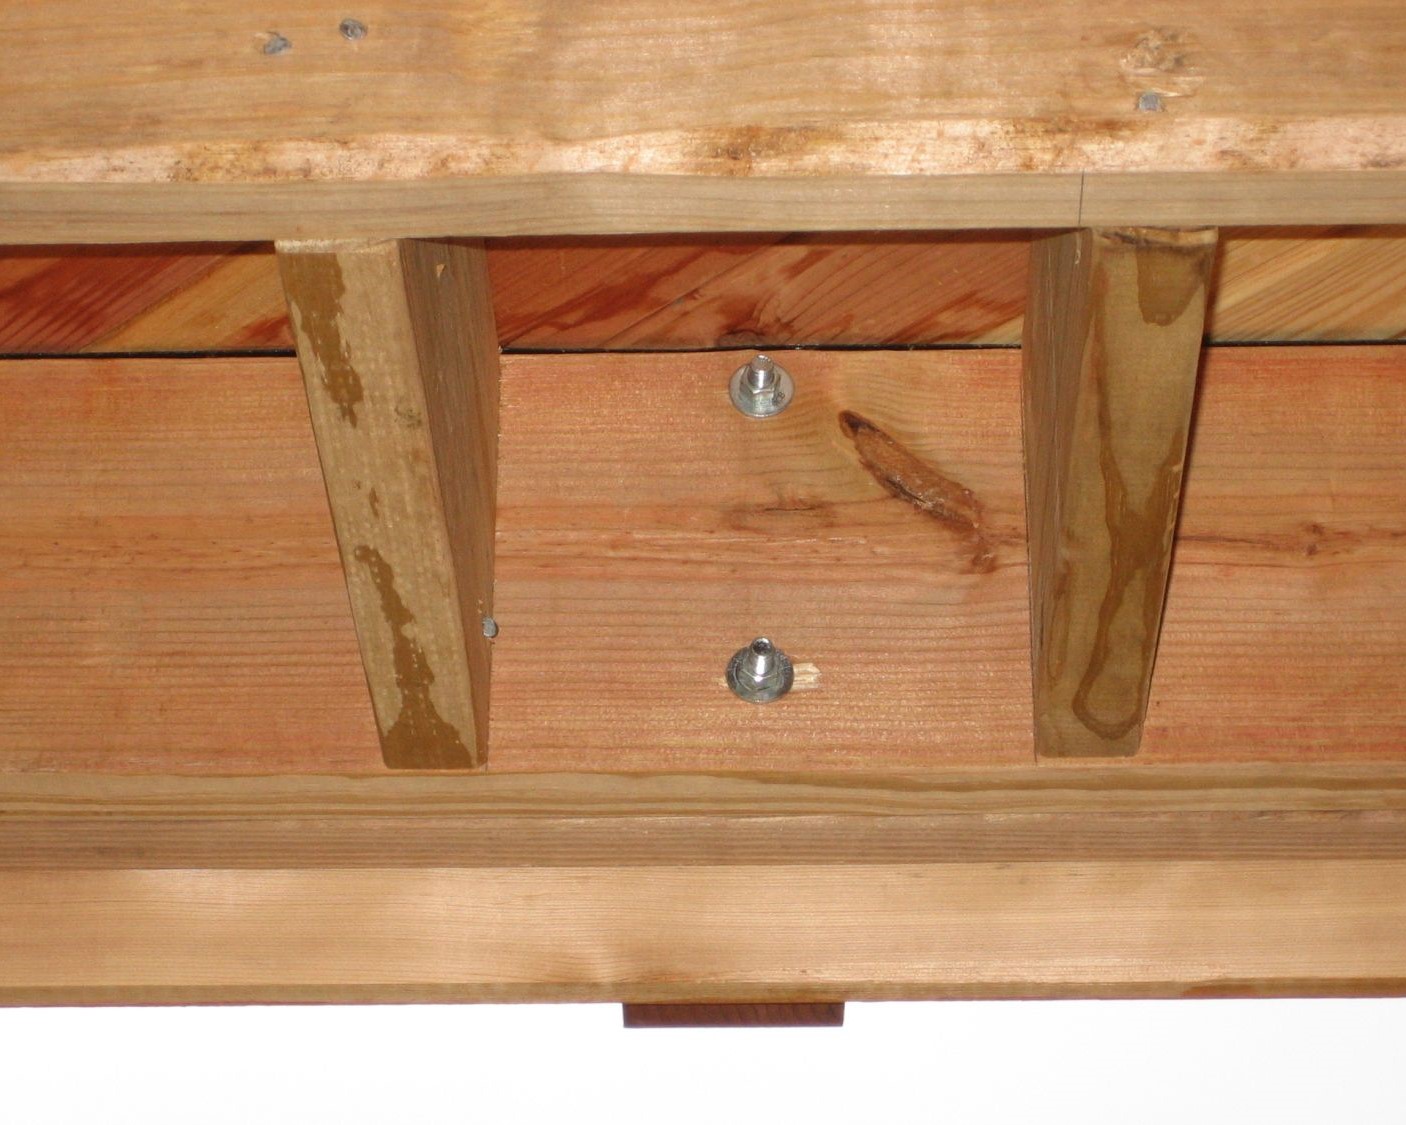 Wood deck frame in wet pressure treated wood